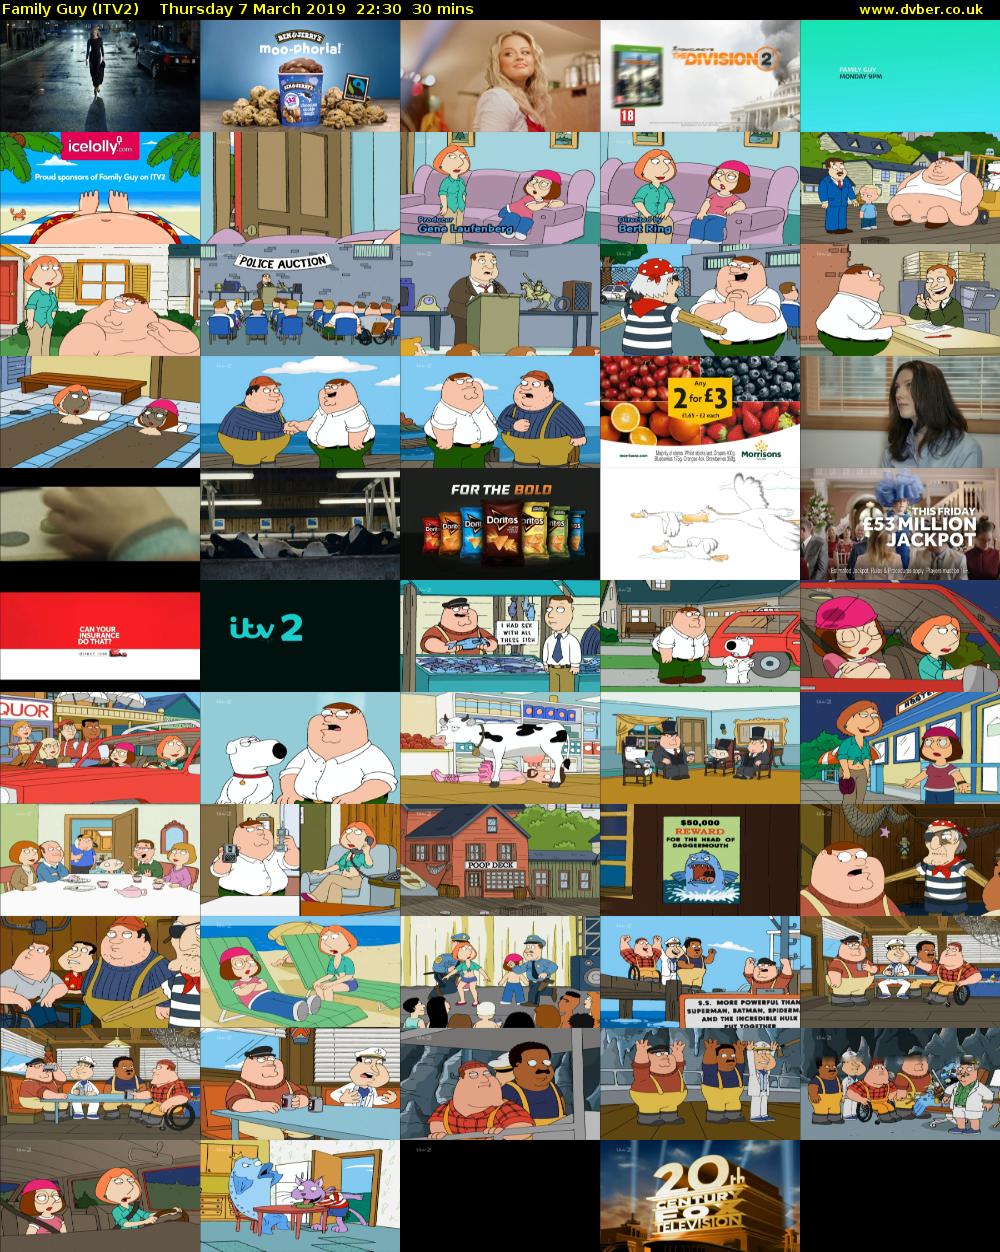 Family Guy (ITV2) Thursday 7 March 2019 22:30 - 23:00